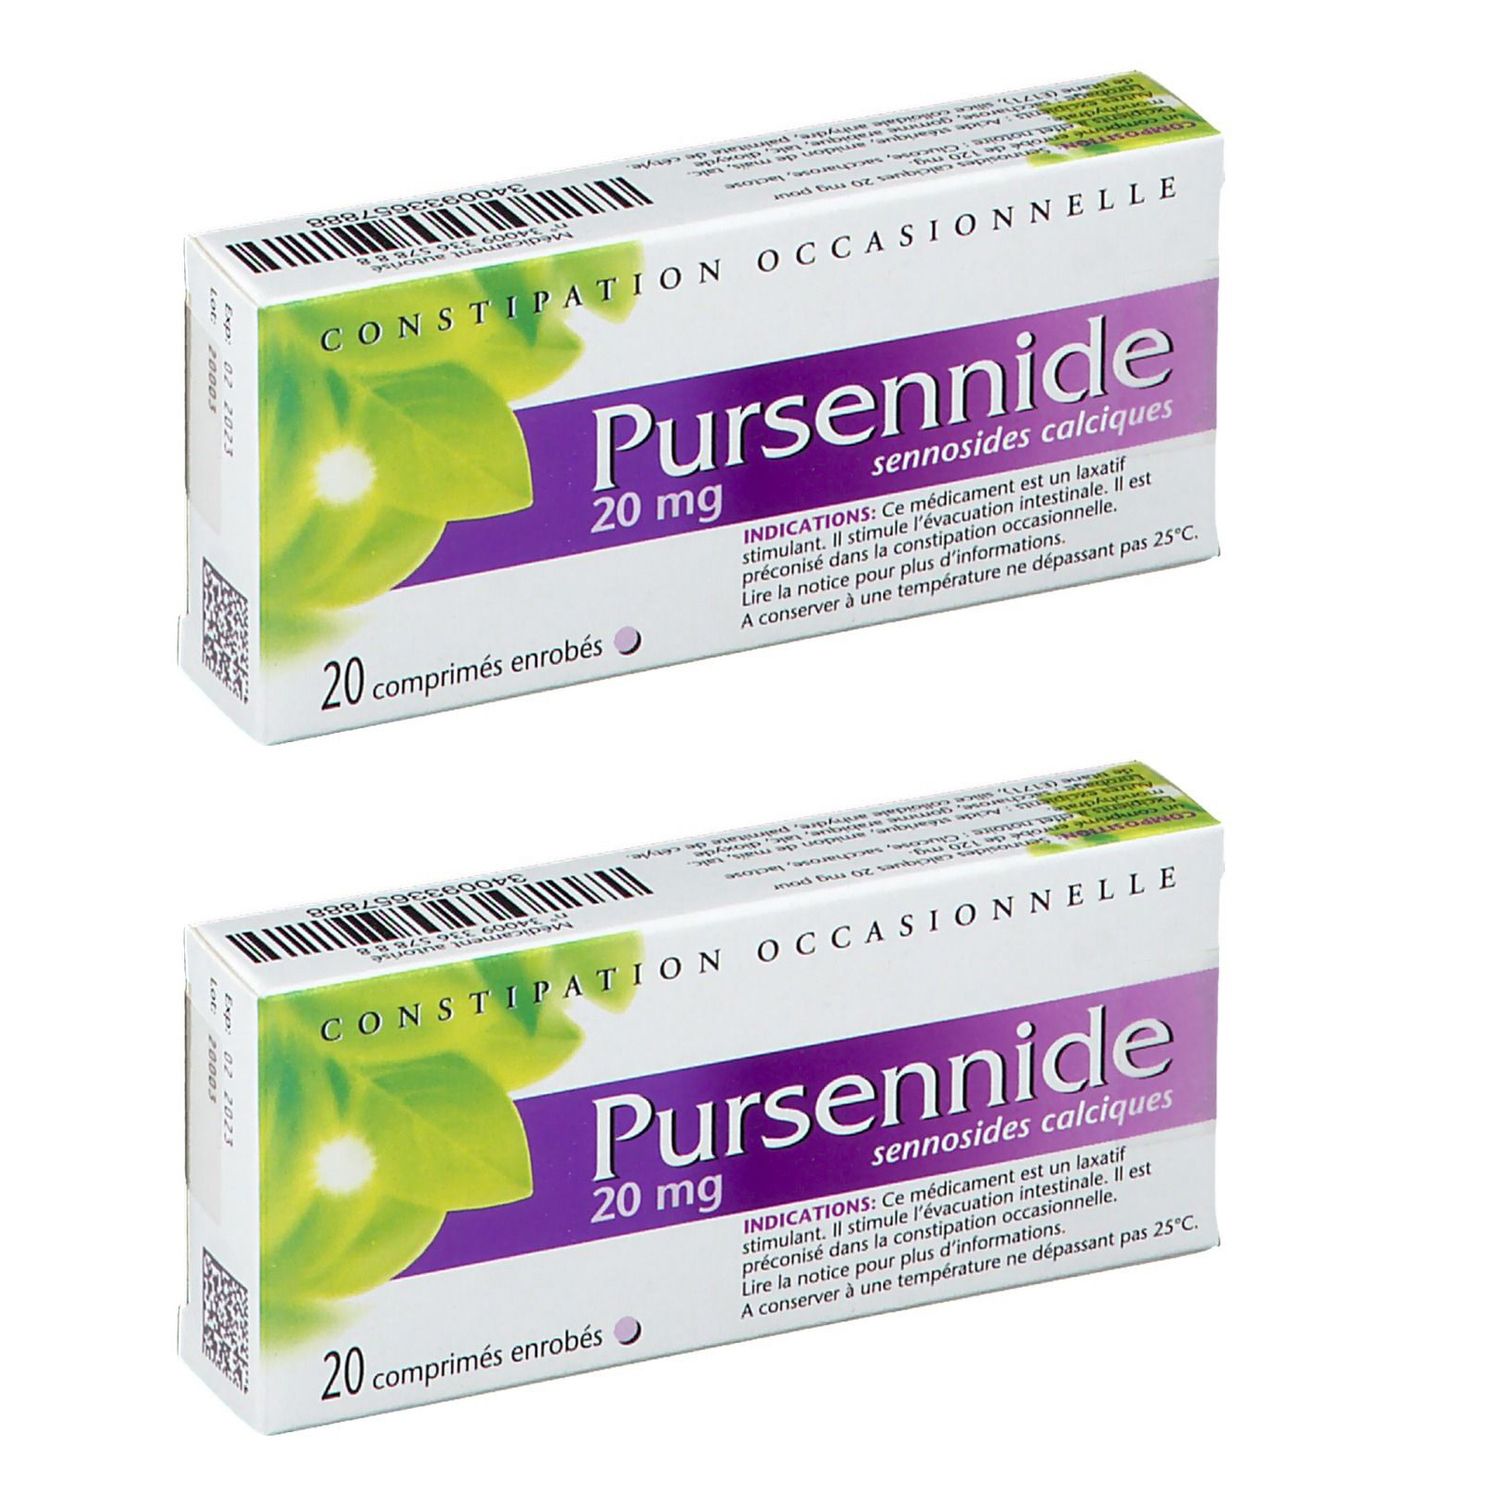 Pursennide® 20 mg